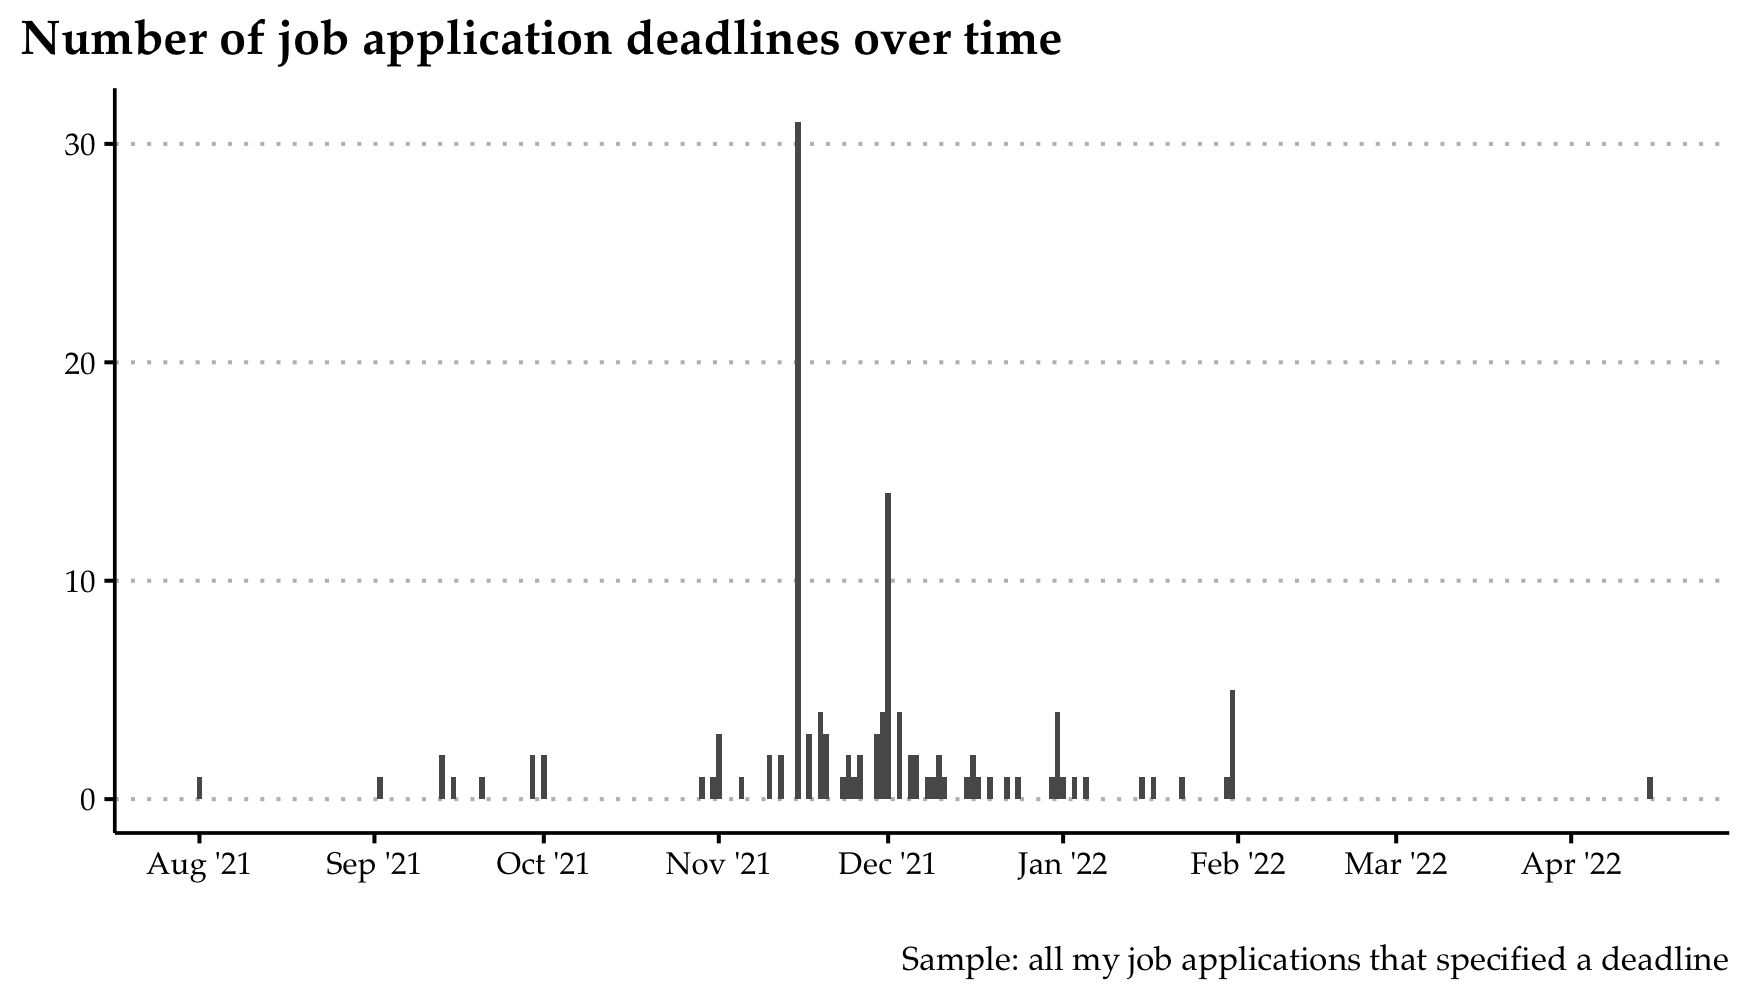 histogram of deadlines